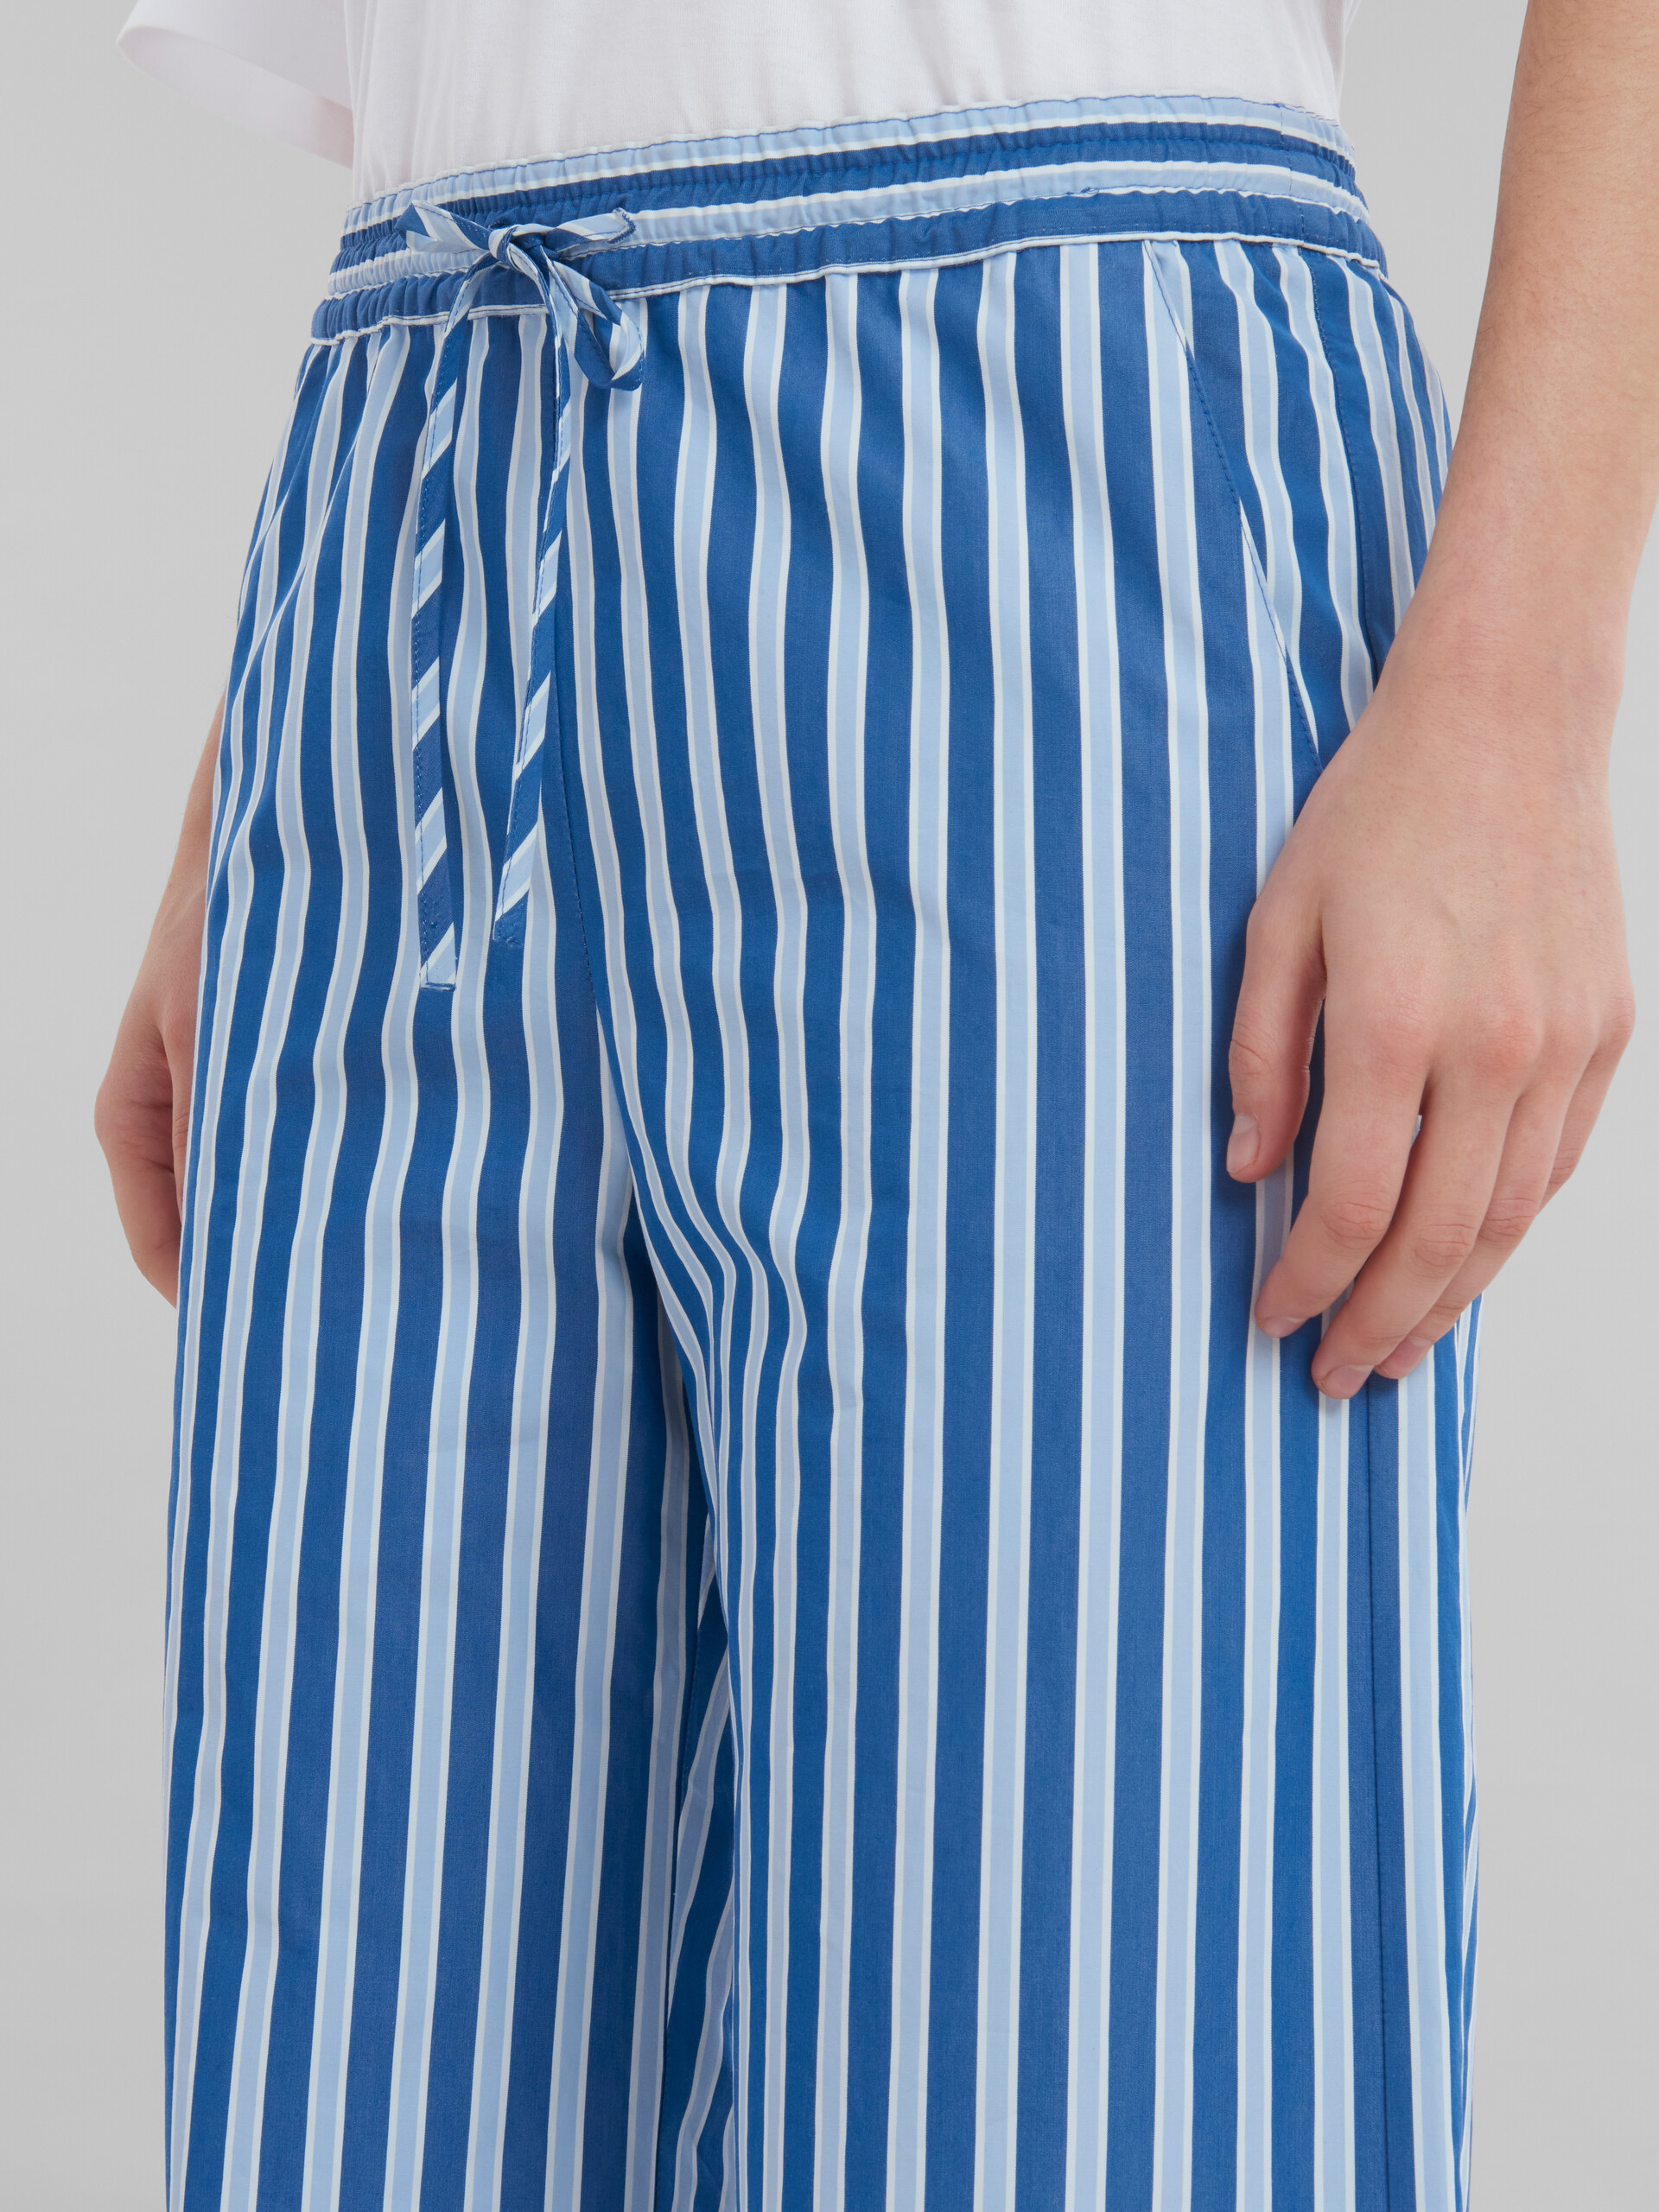 Pantalón de pijama de popelina ecológica a rayas azules y blancas - Pantalones - Image 4